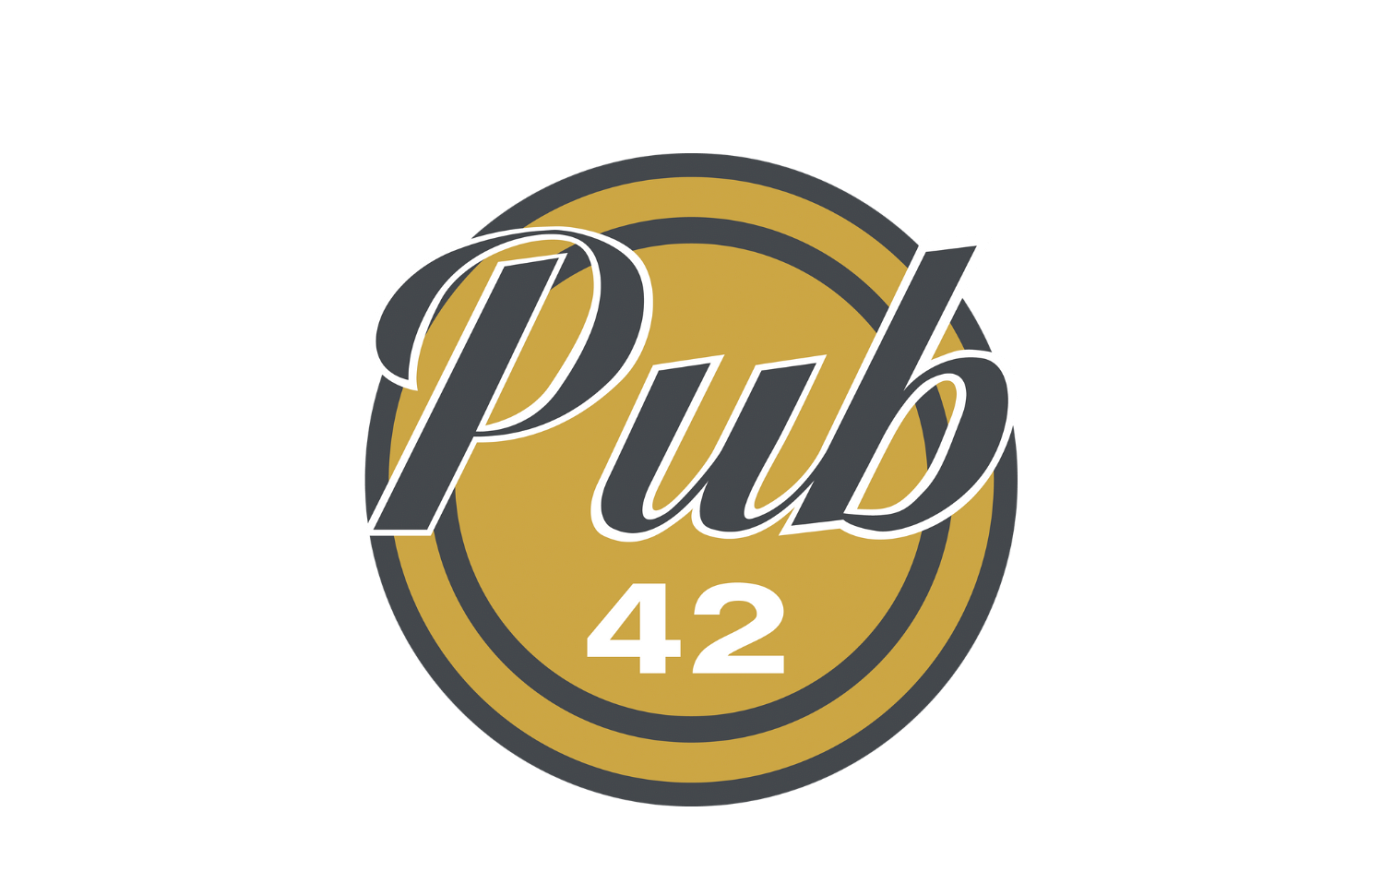 The Pub 42 visit website